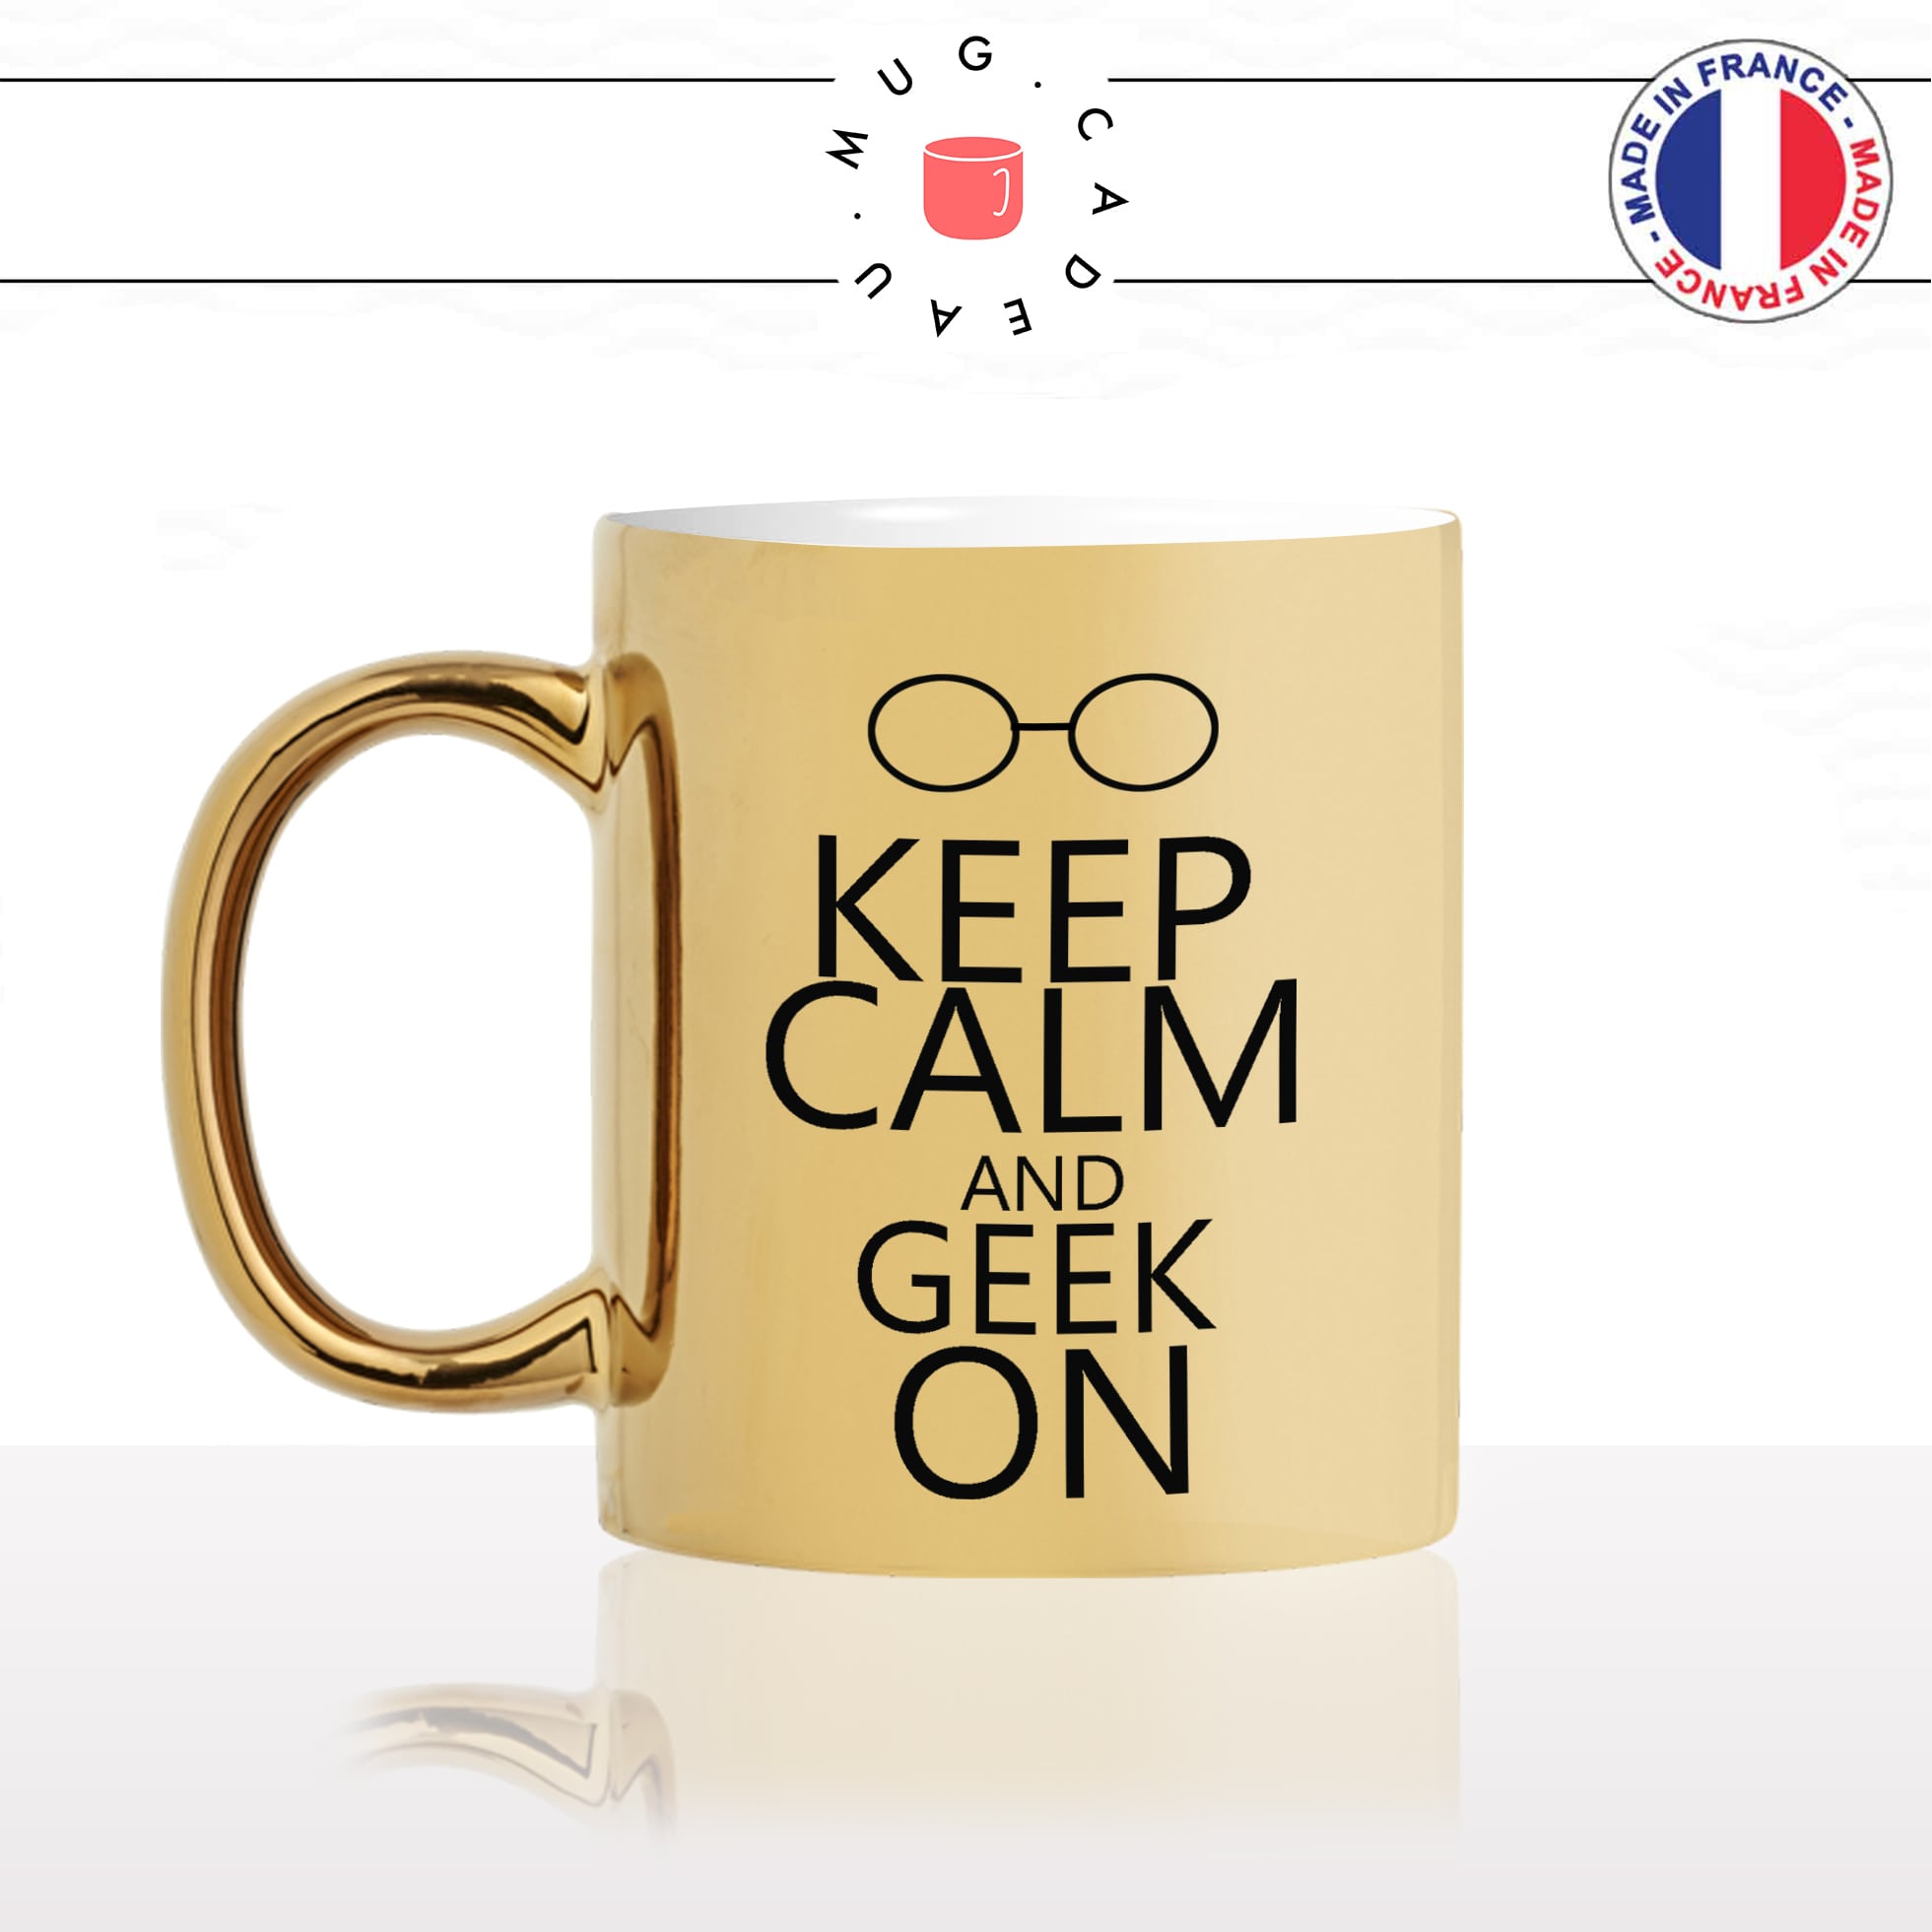 mug-tasse-gold-or-doré-keep-calm-and-geek-on-lunettes-intelligent-intello-gamer-pc-humour-idée-cadeau-fun-café-thé-personnalisé-min